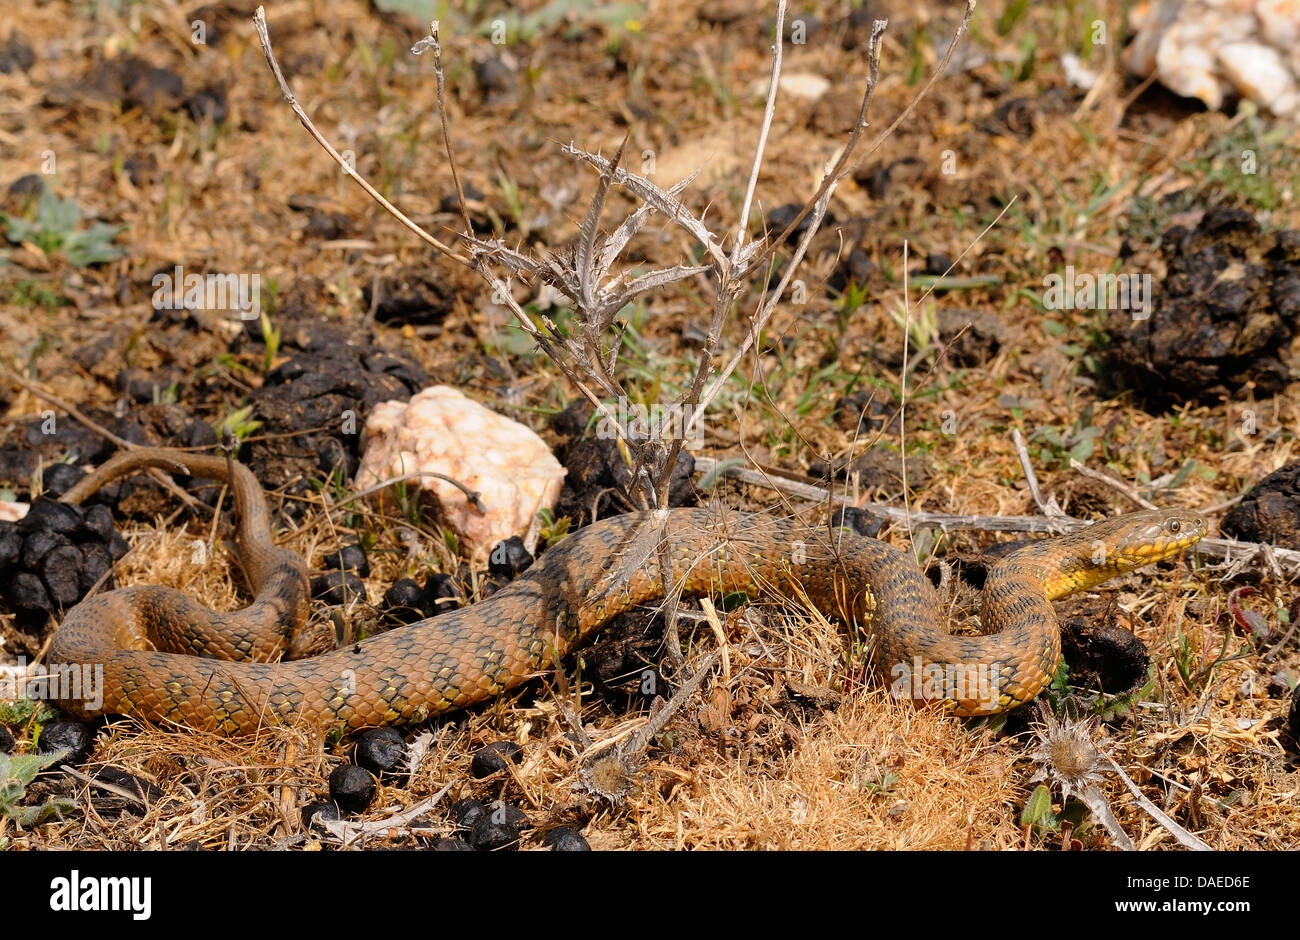 Viperine snake viperine grass Snake (Natrix maura), rampant sur le sol, l'Espagne, l'Estrémadure Banque D'Images